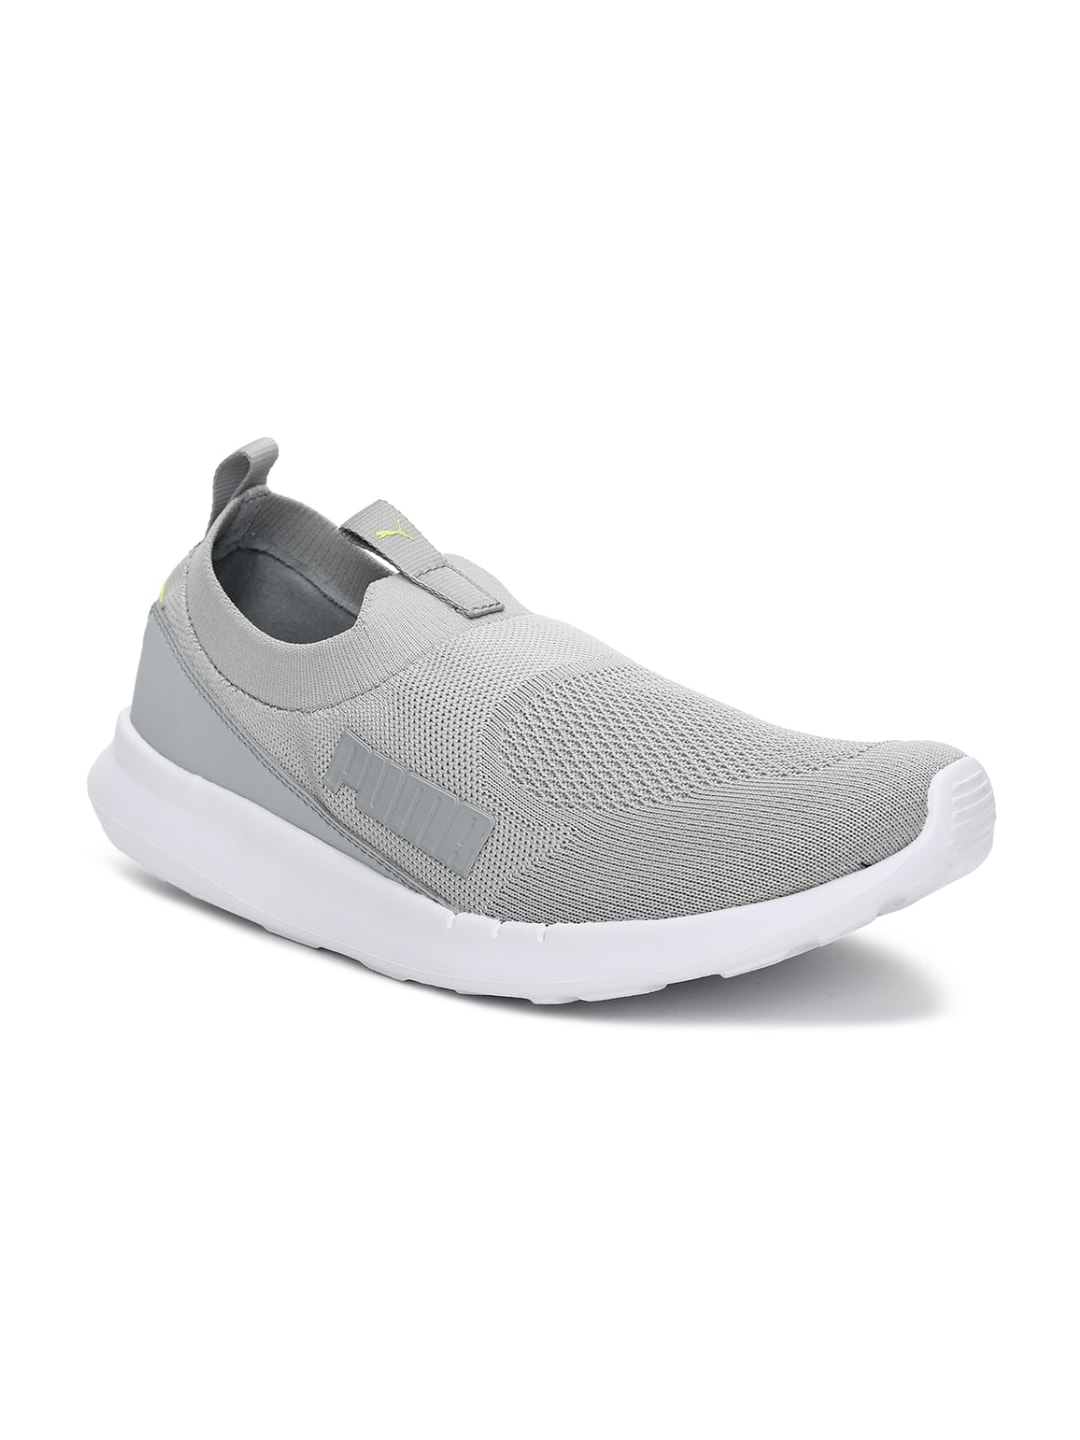 Buy Puma Men Grey Slip On Sneakers - Casual Shoes for Men 16864554 | Myntra